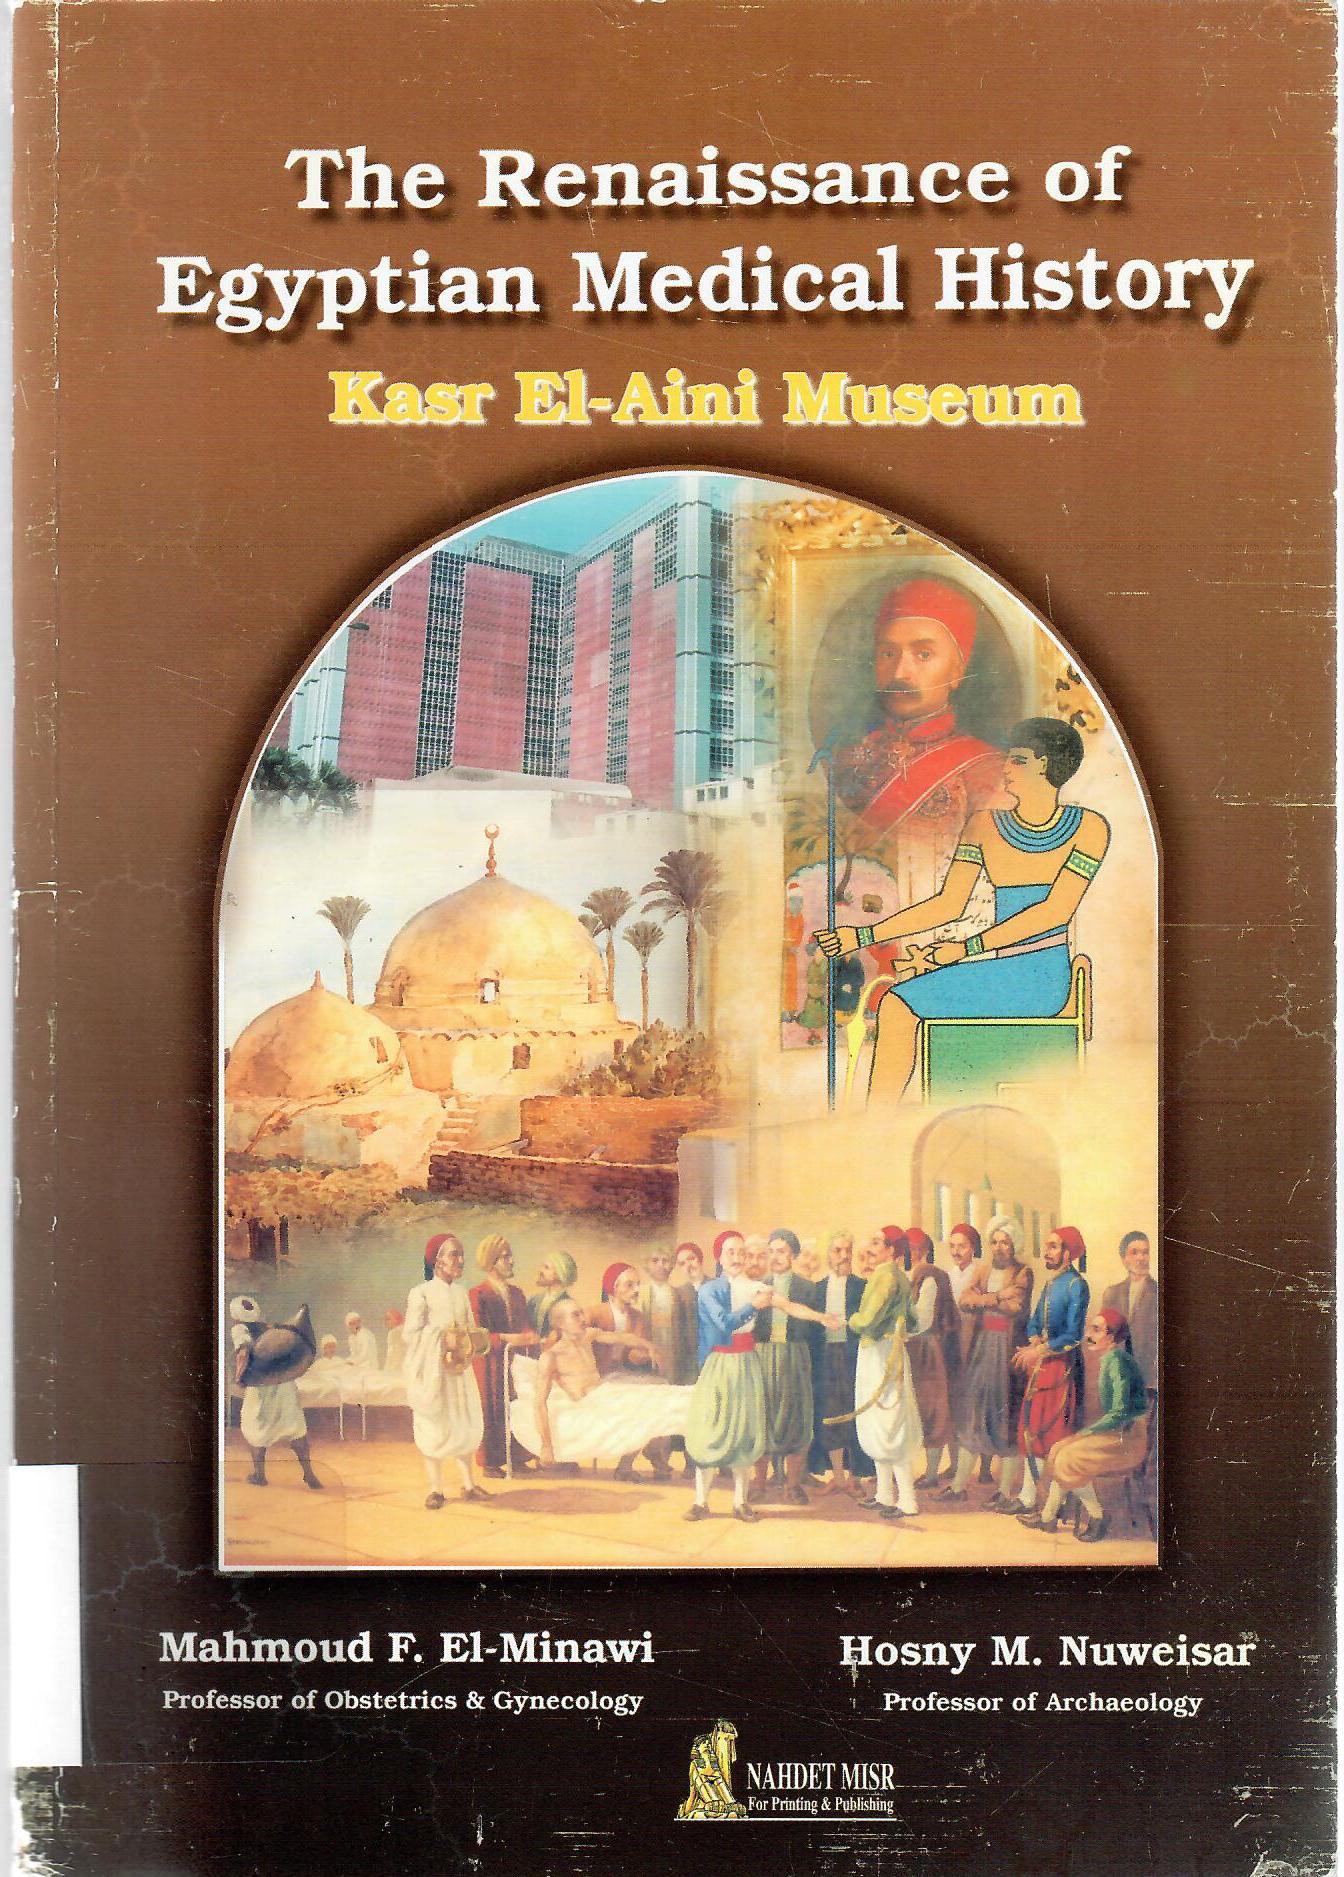 The Renaissance of Egyptian Medical History